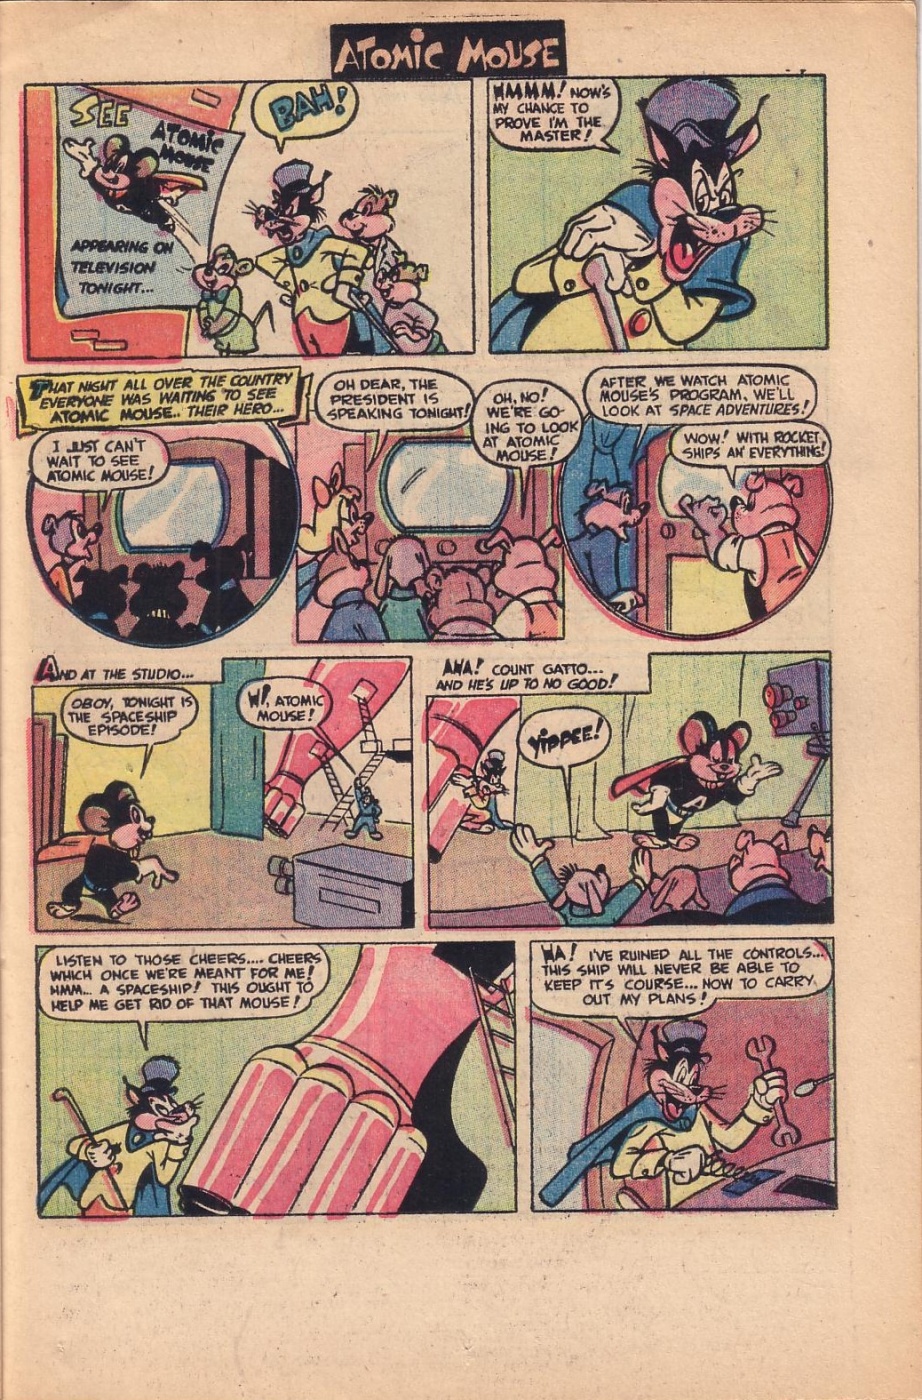 Atomic Mouse Comics - Funny Comics (21)